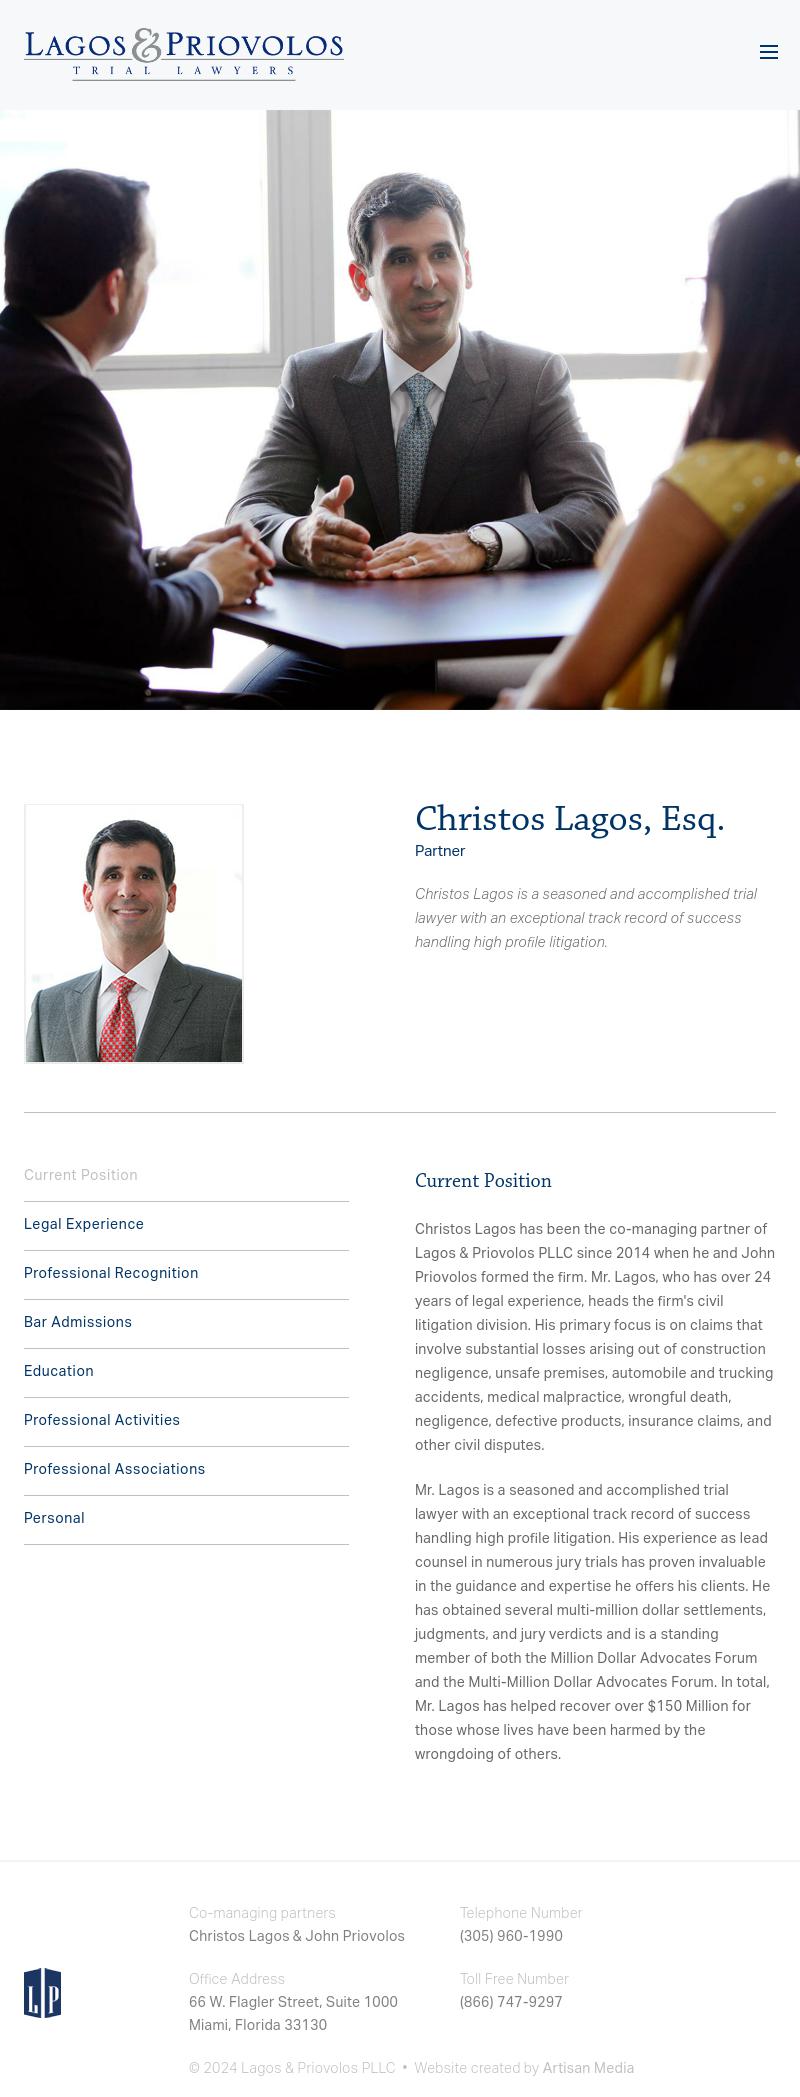 Lagos & Priovolos PLLC - Miami FL Lawyers